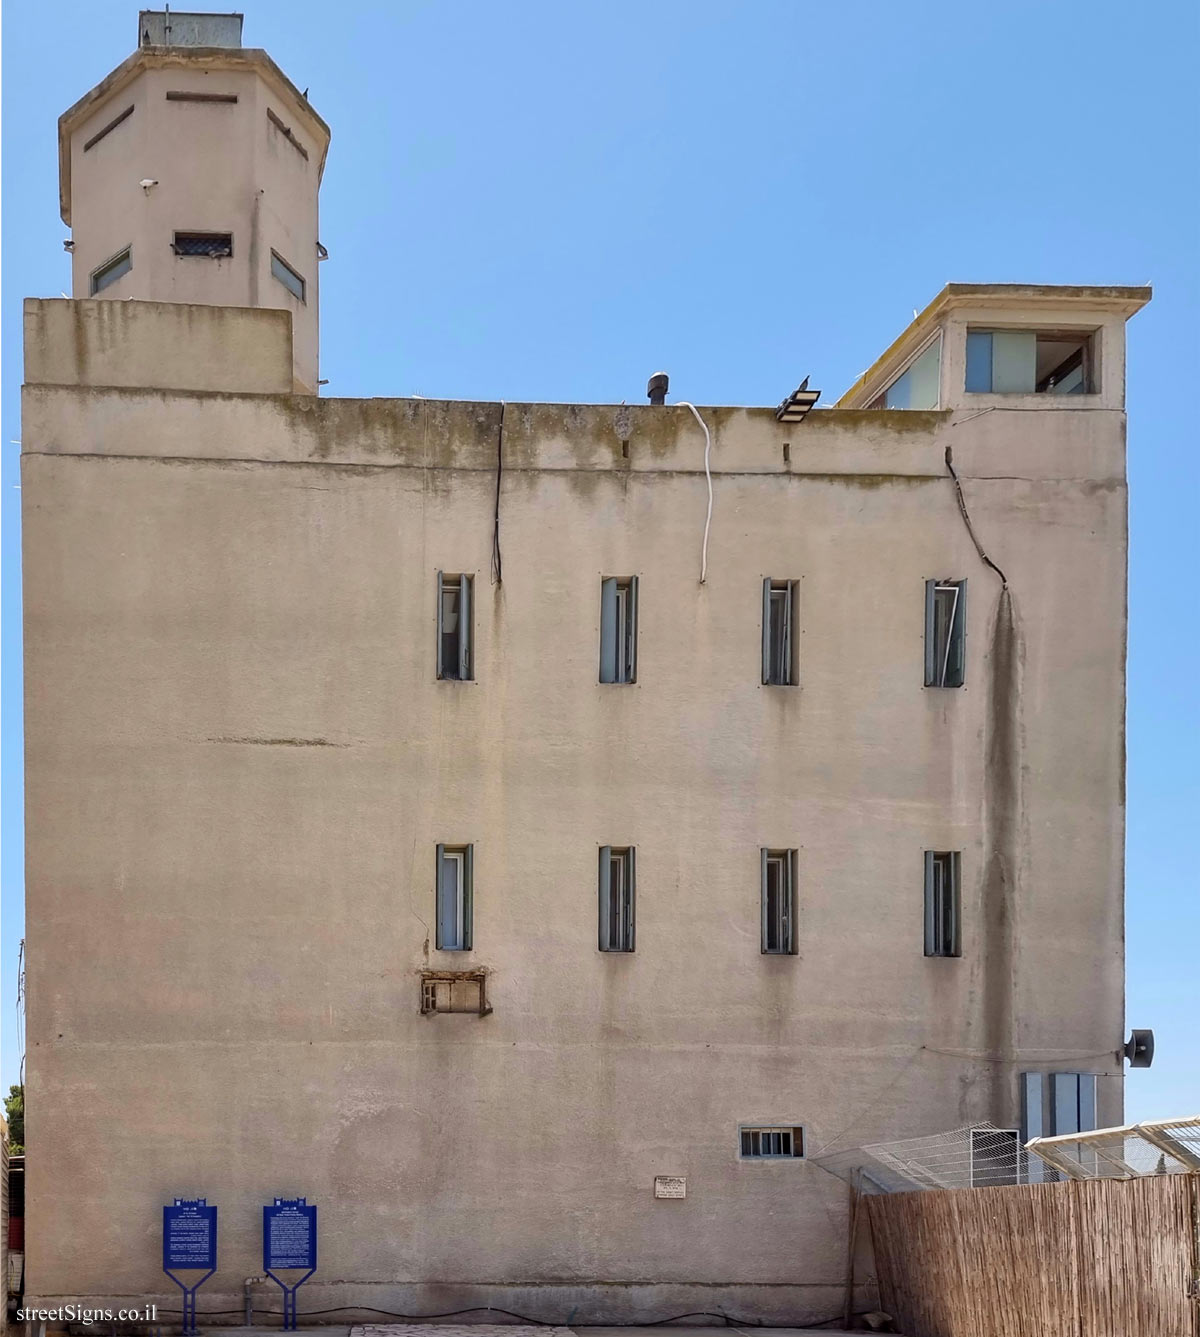 Metzudat Koach - Heritage Sites in Israel - Al-Nabi Yusha Police Station